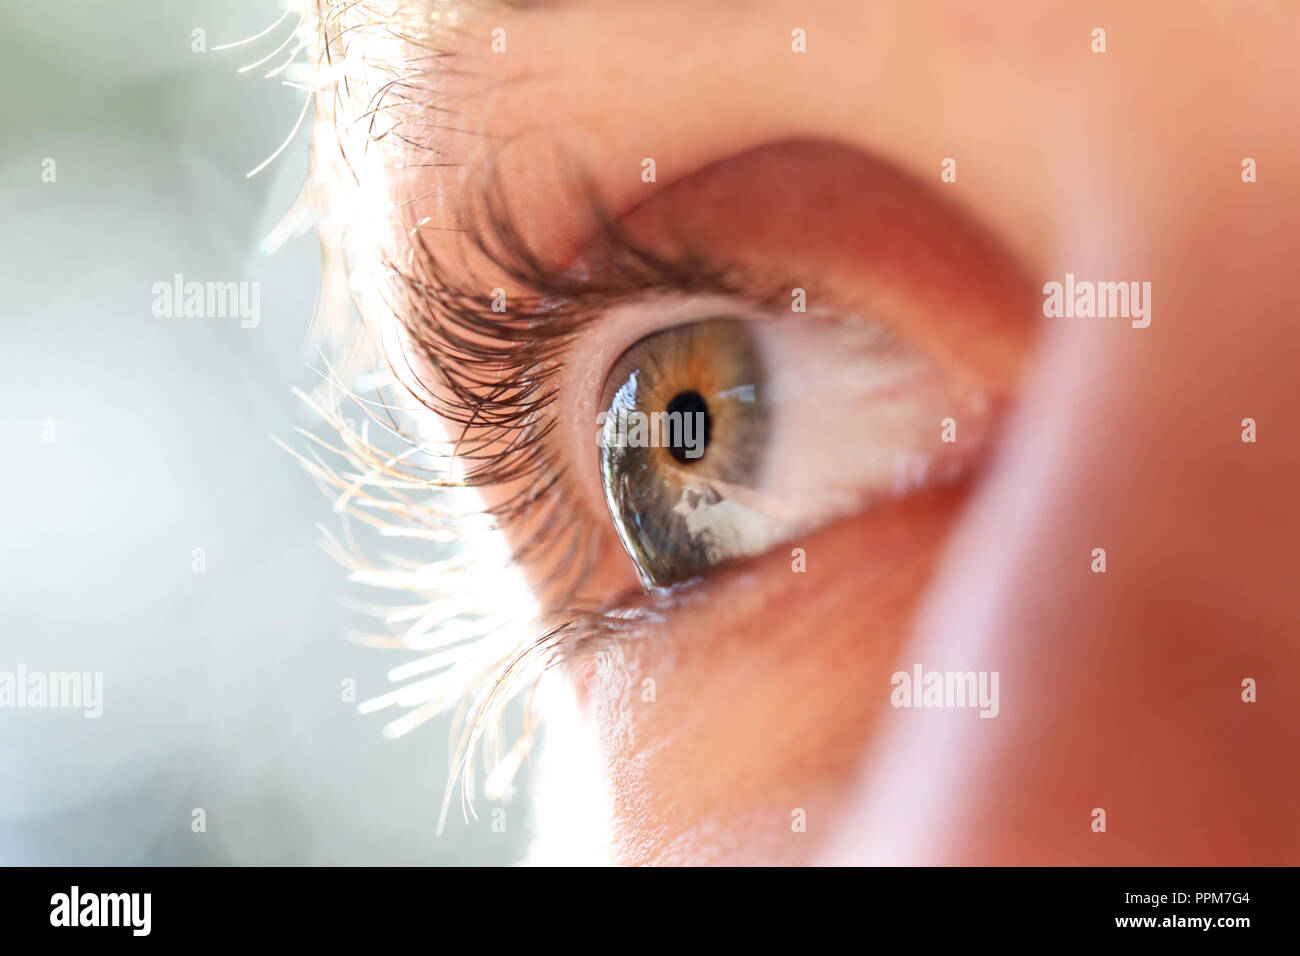 close up macro detail of blue human eye ball iris and eye lashes. 3/4 view shallow depth of field anatomy shot of eye. Stock Photo